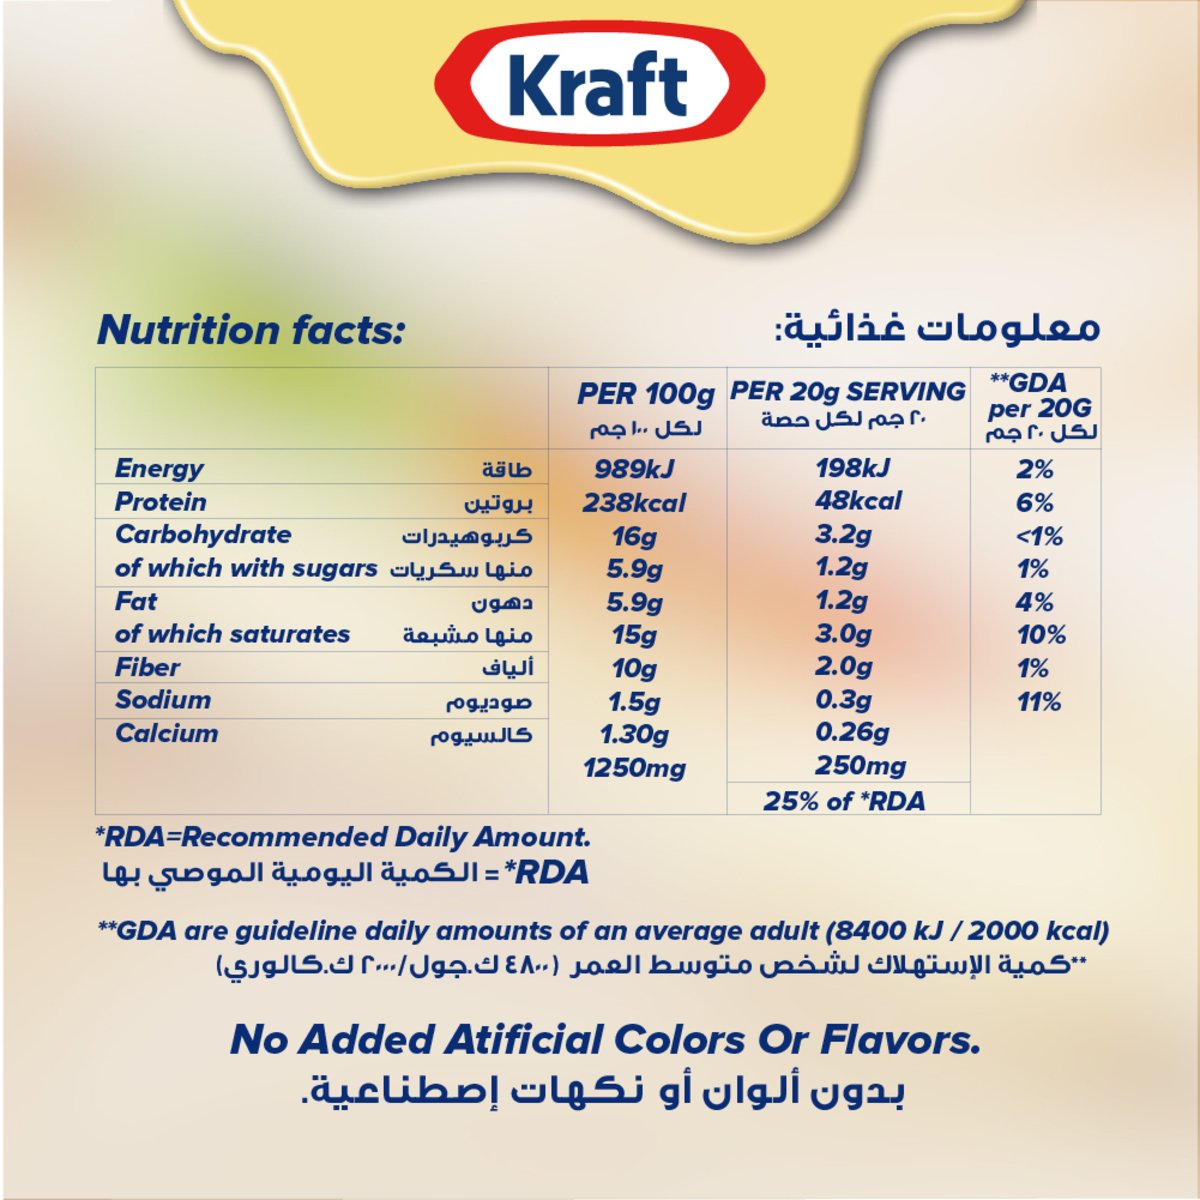 Kraft Original Sliced Cheese 2 x 200 g